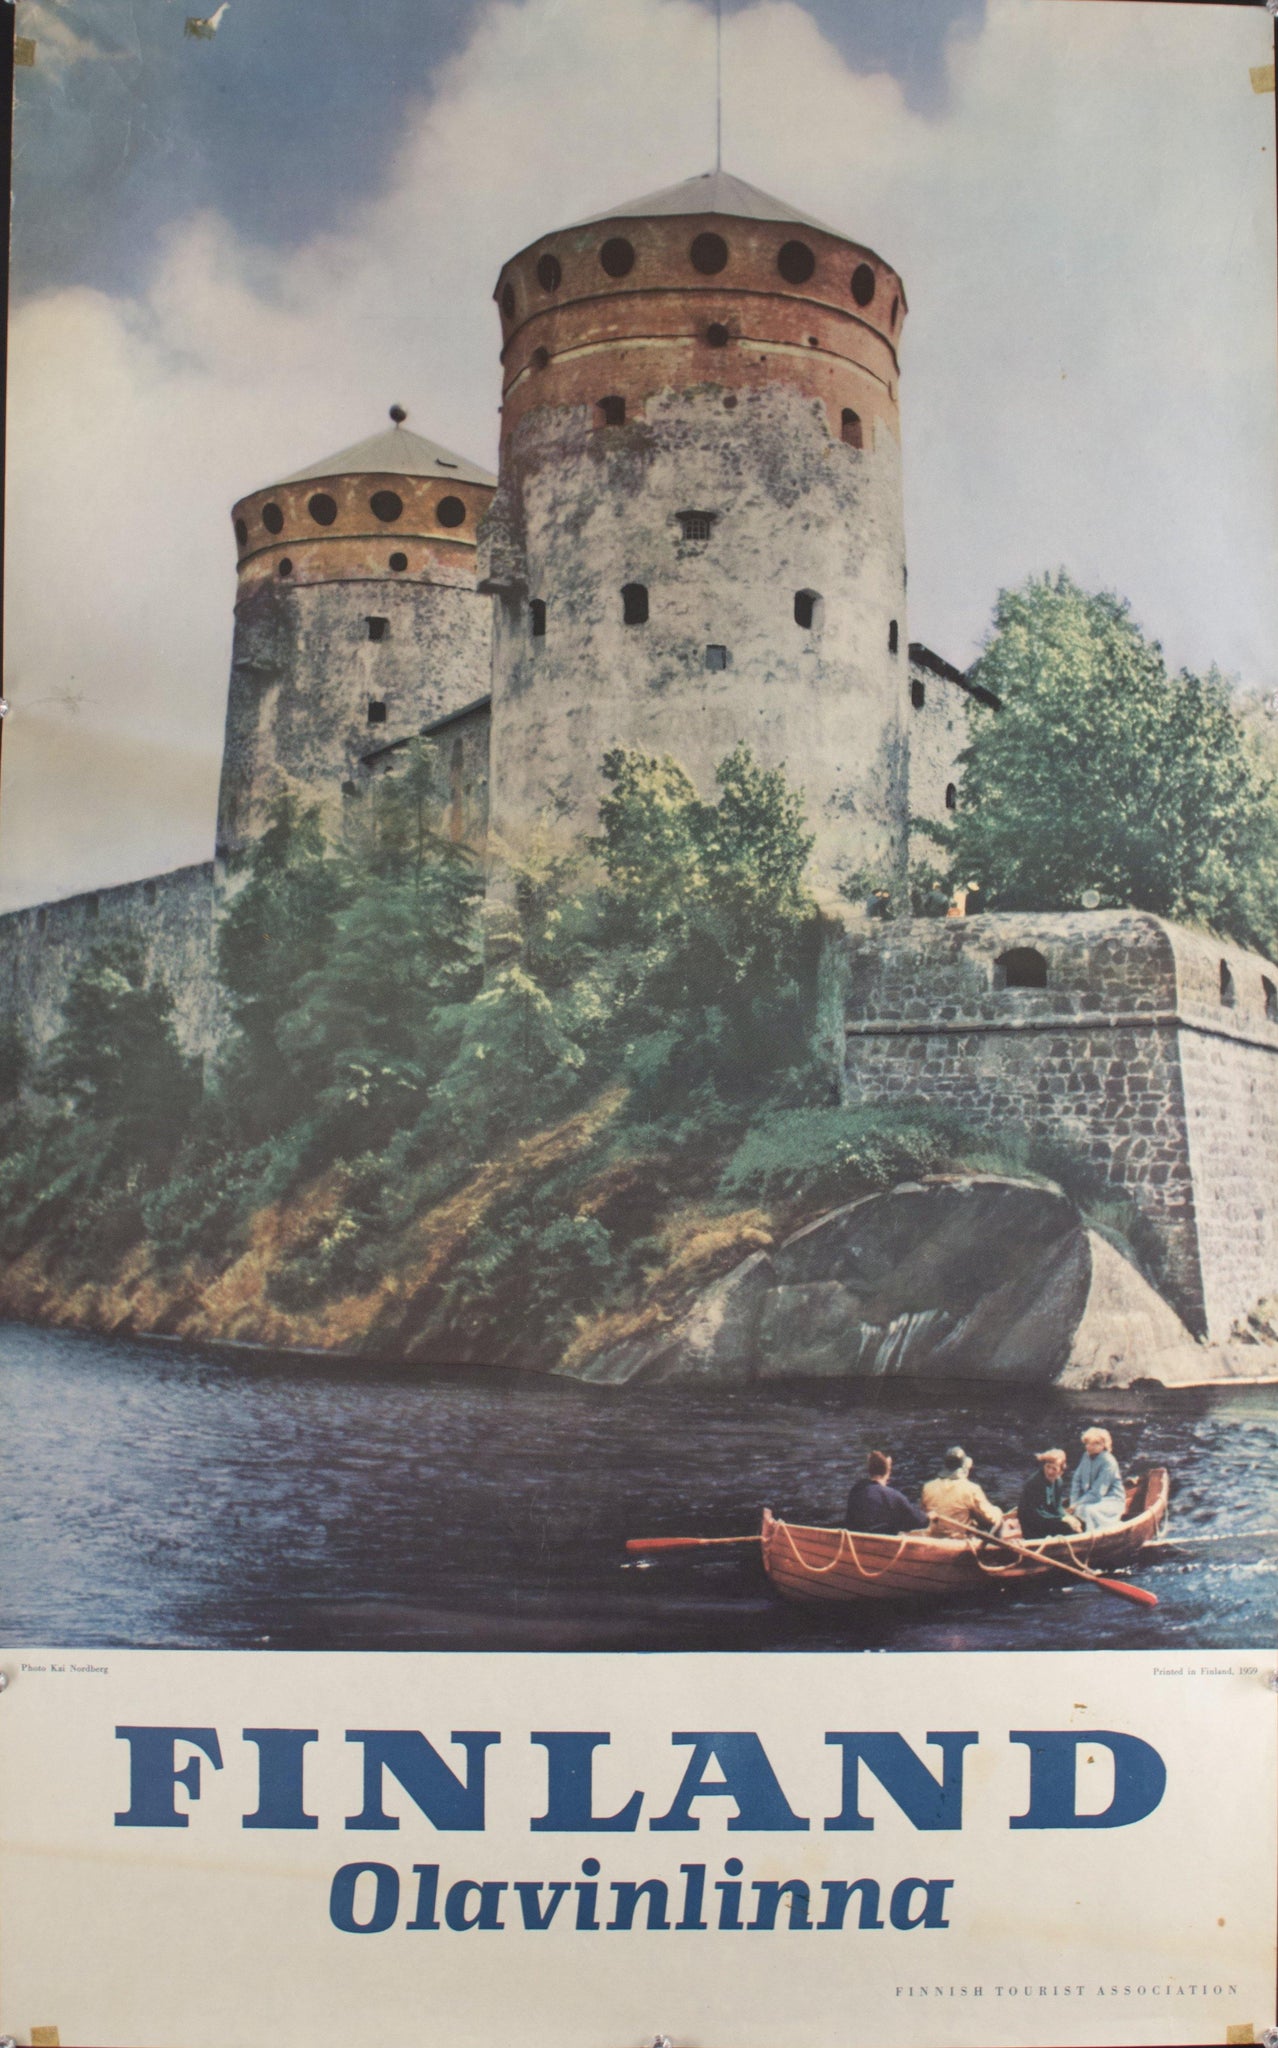 1959 Finland Olavinlinna - Golden Age Posters